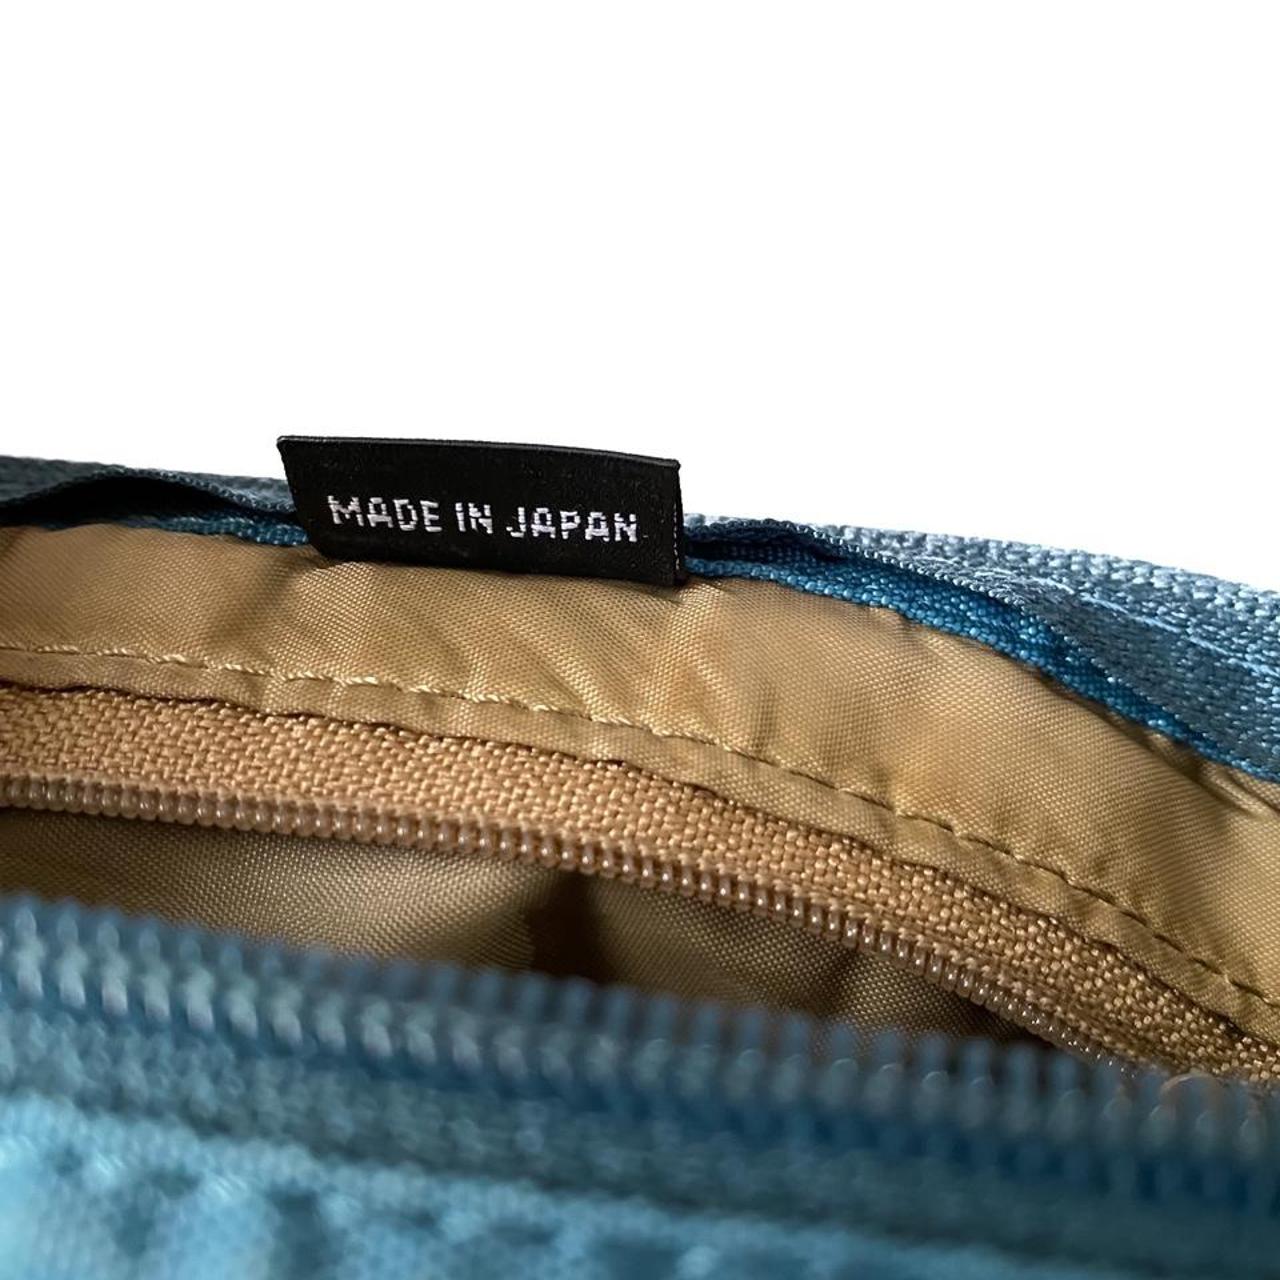 Product Image 4 - Porter Yoshida Slingbag
Made in Japan

Shipment